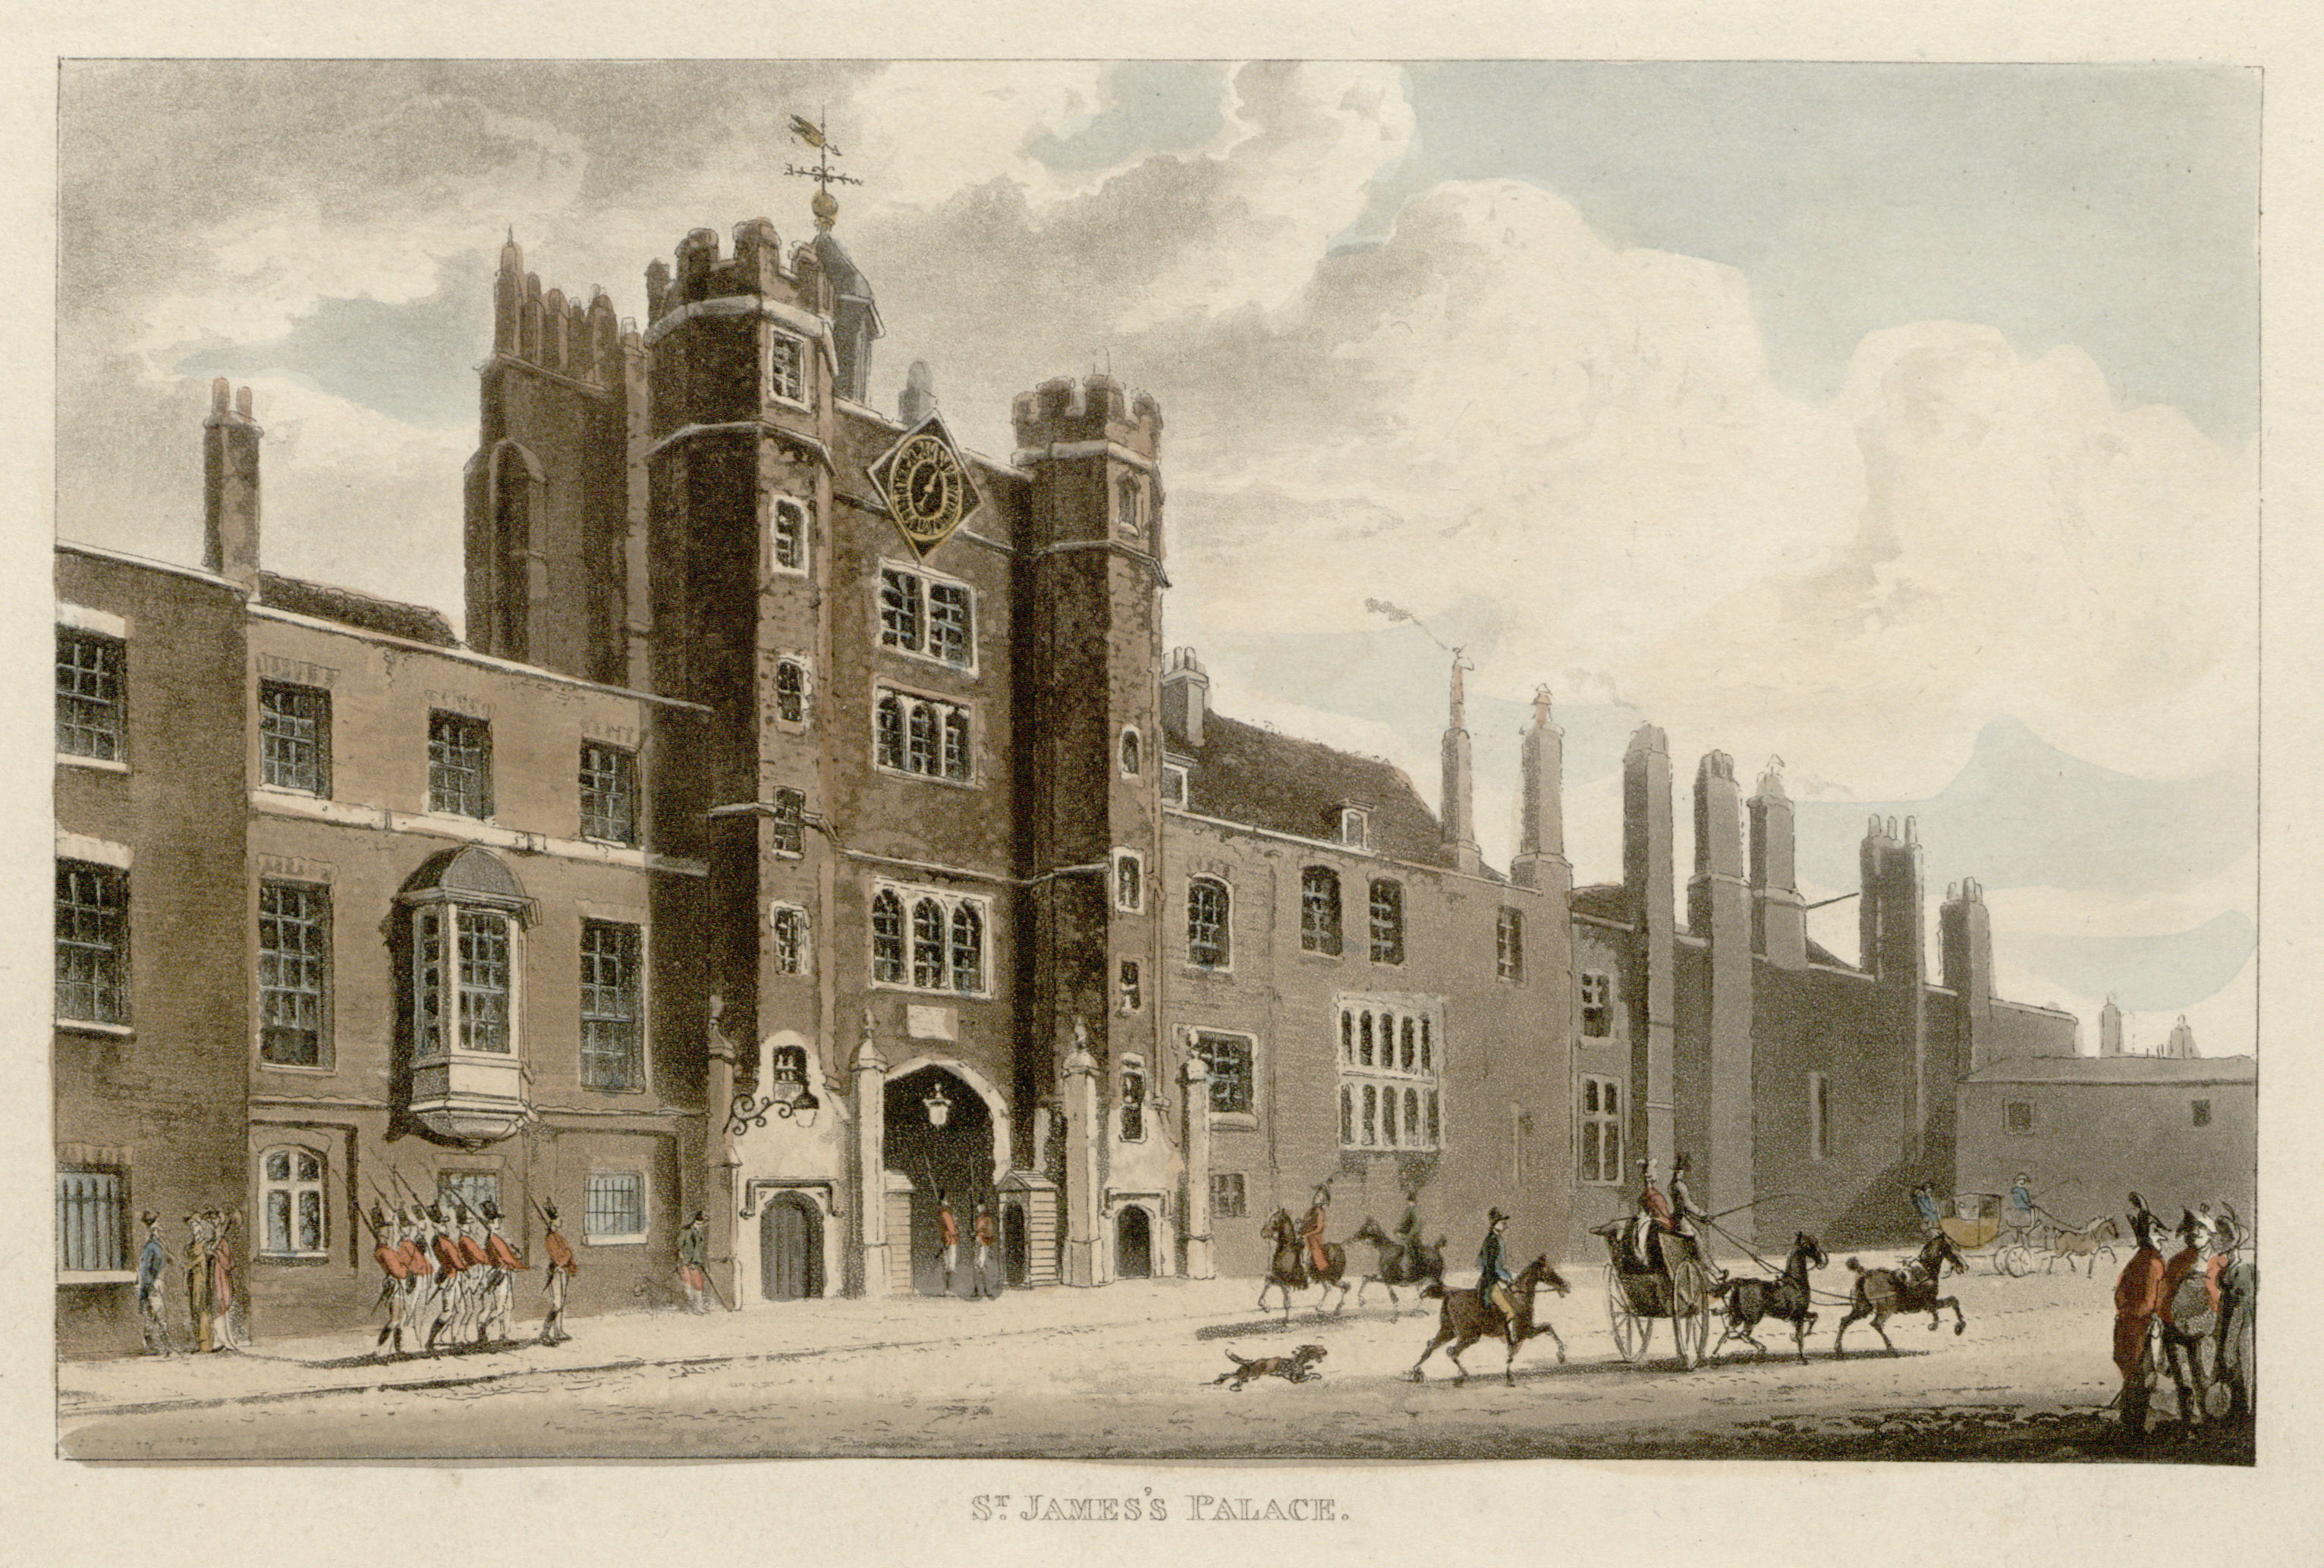 01 - Papworth - St James's Palace